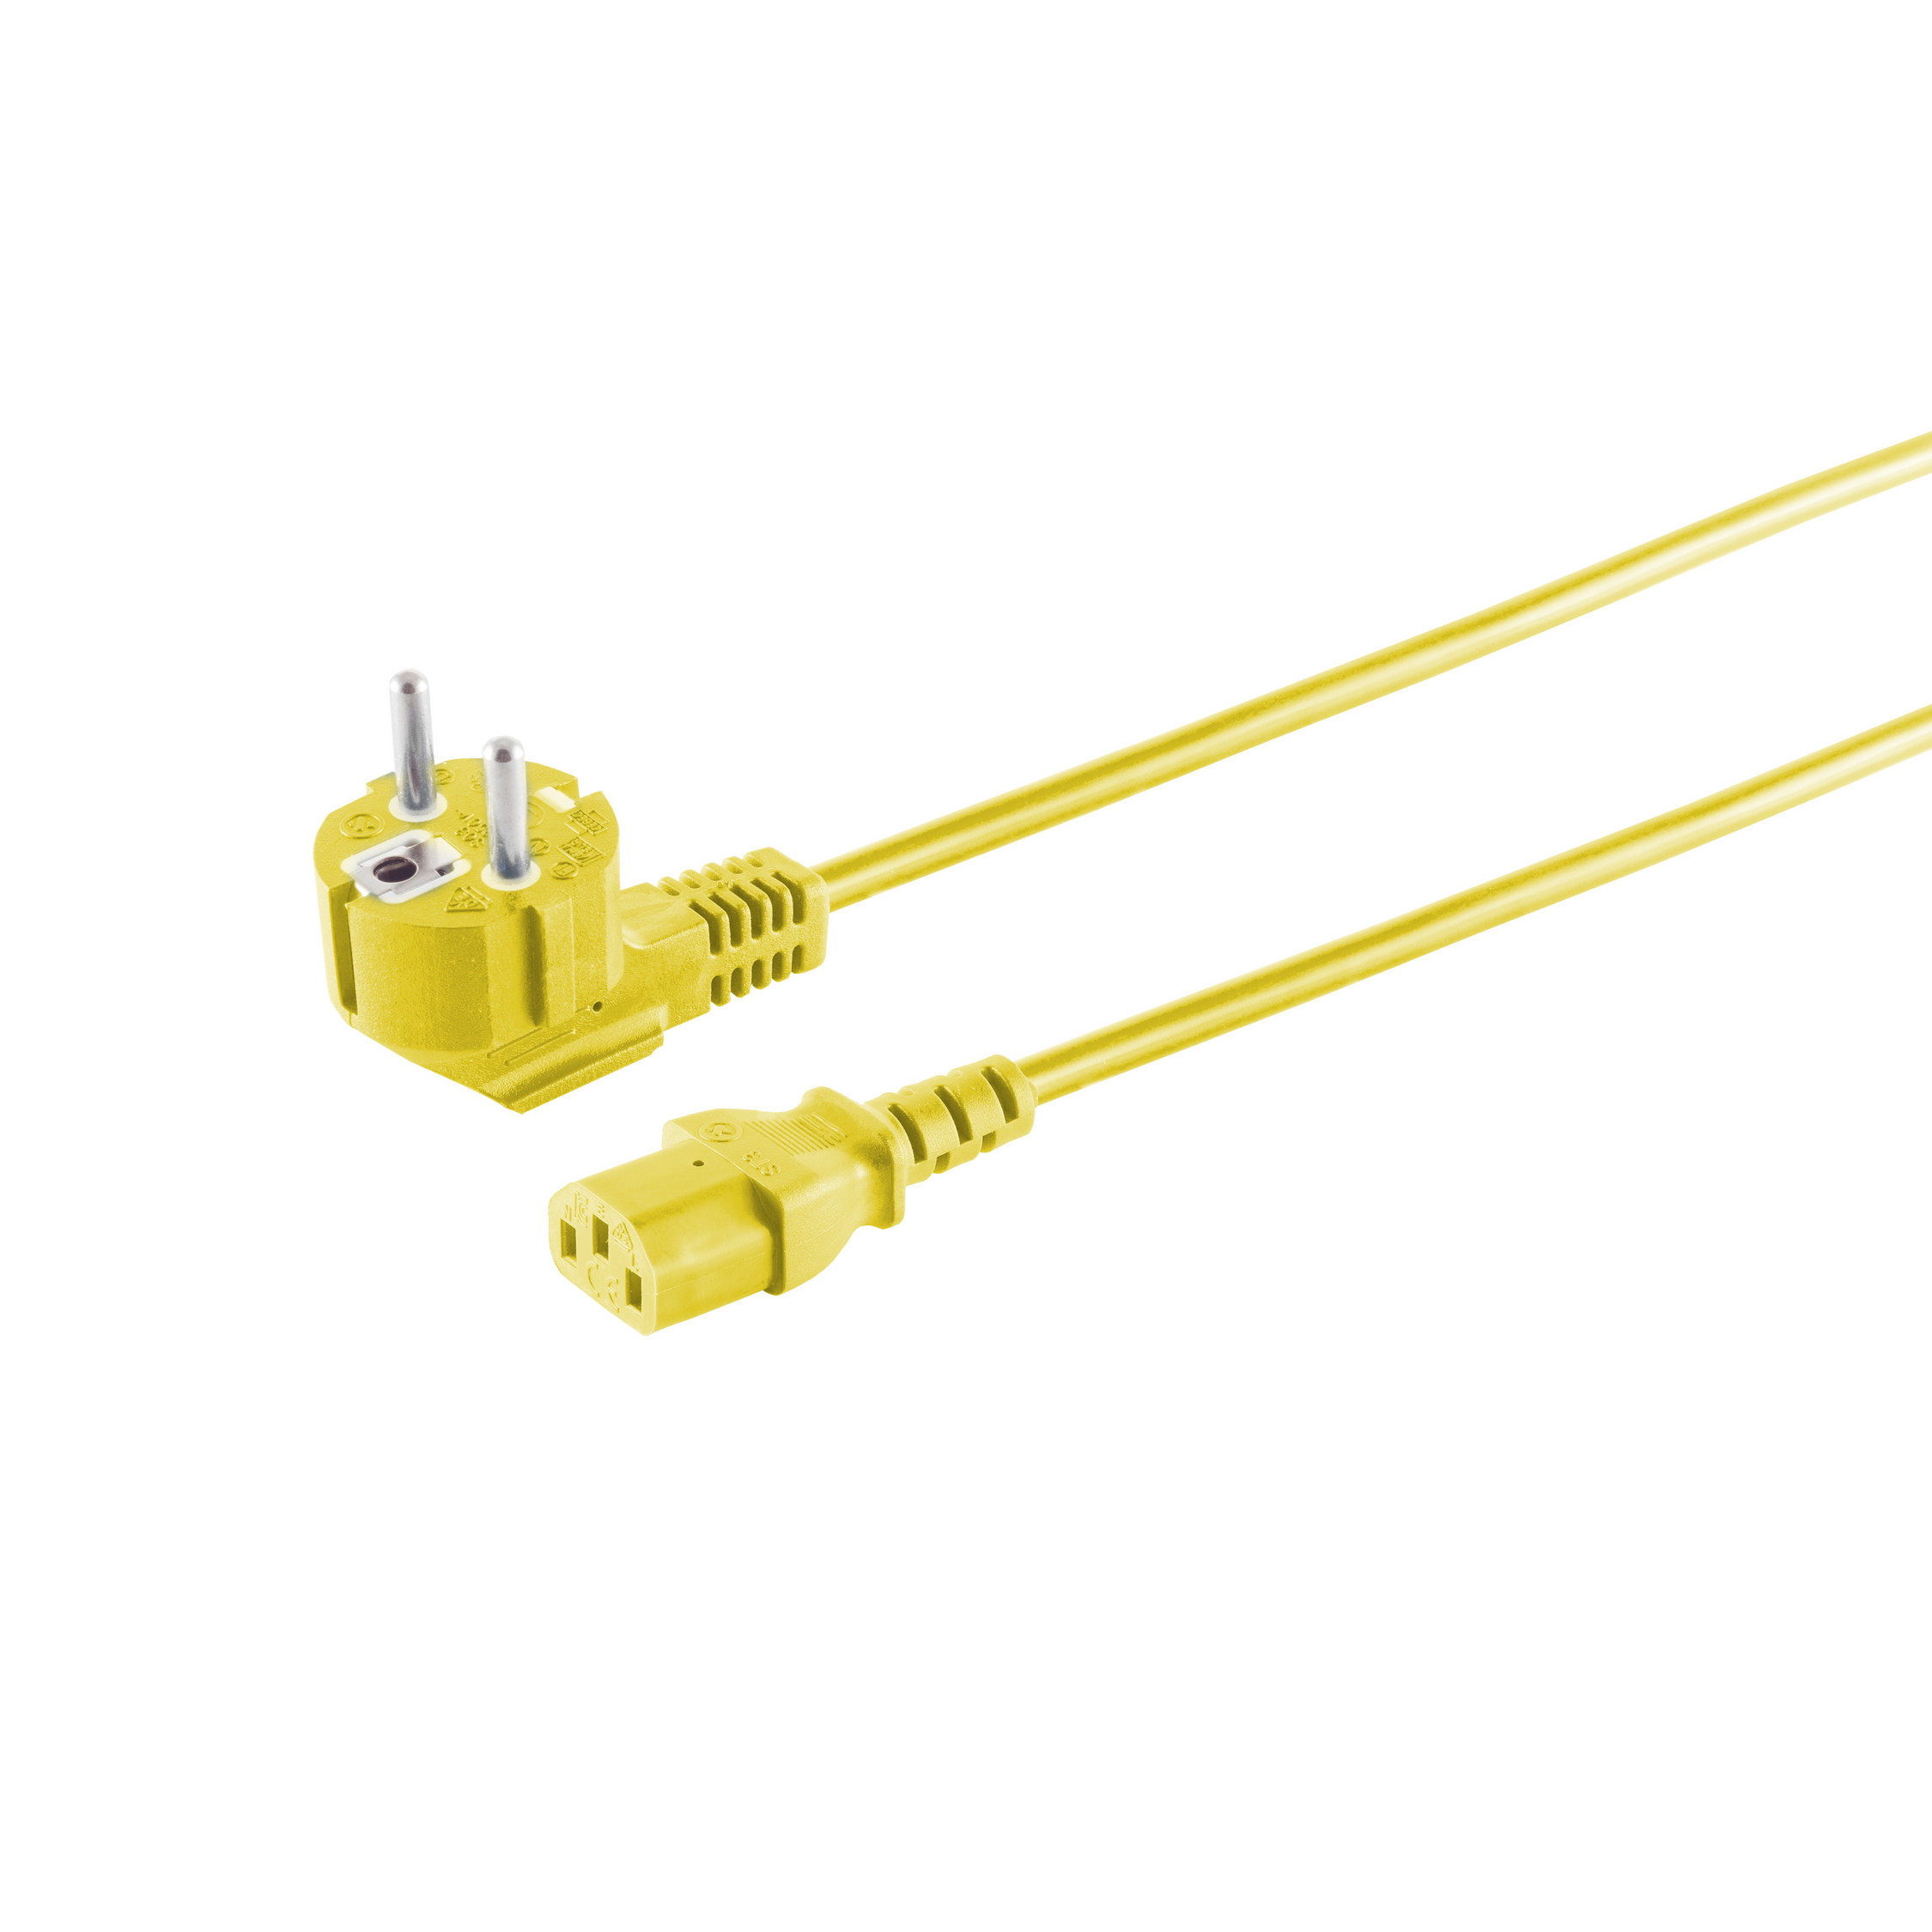 S/CONN MAXIMUM CONNECTIVITY Schutzkontakt 90°/Kaltgerätebuchse 5m Netzanschlusskabel gelb